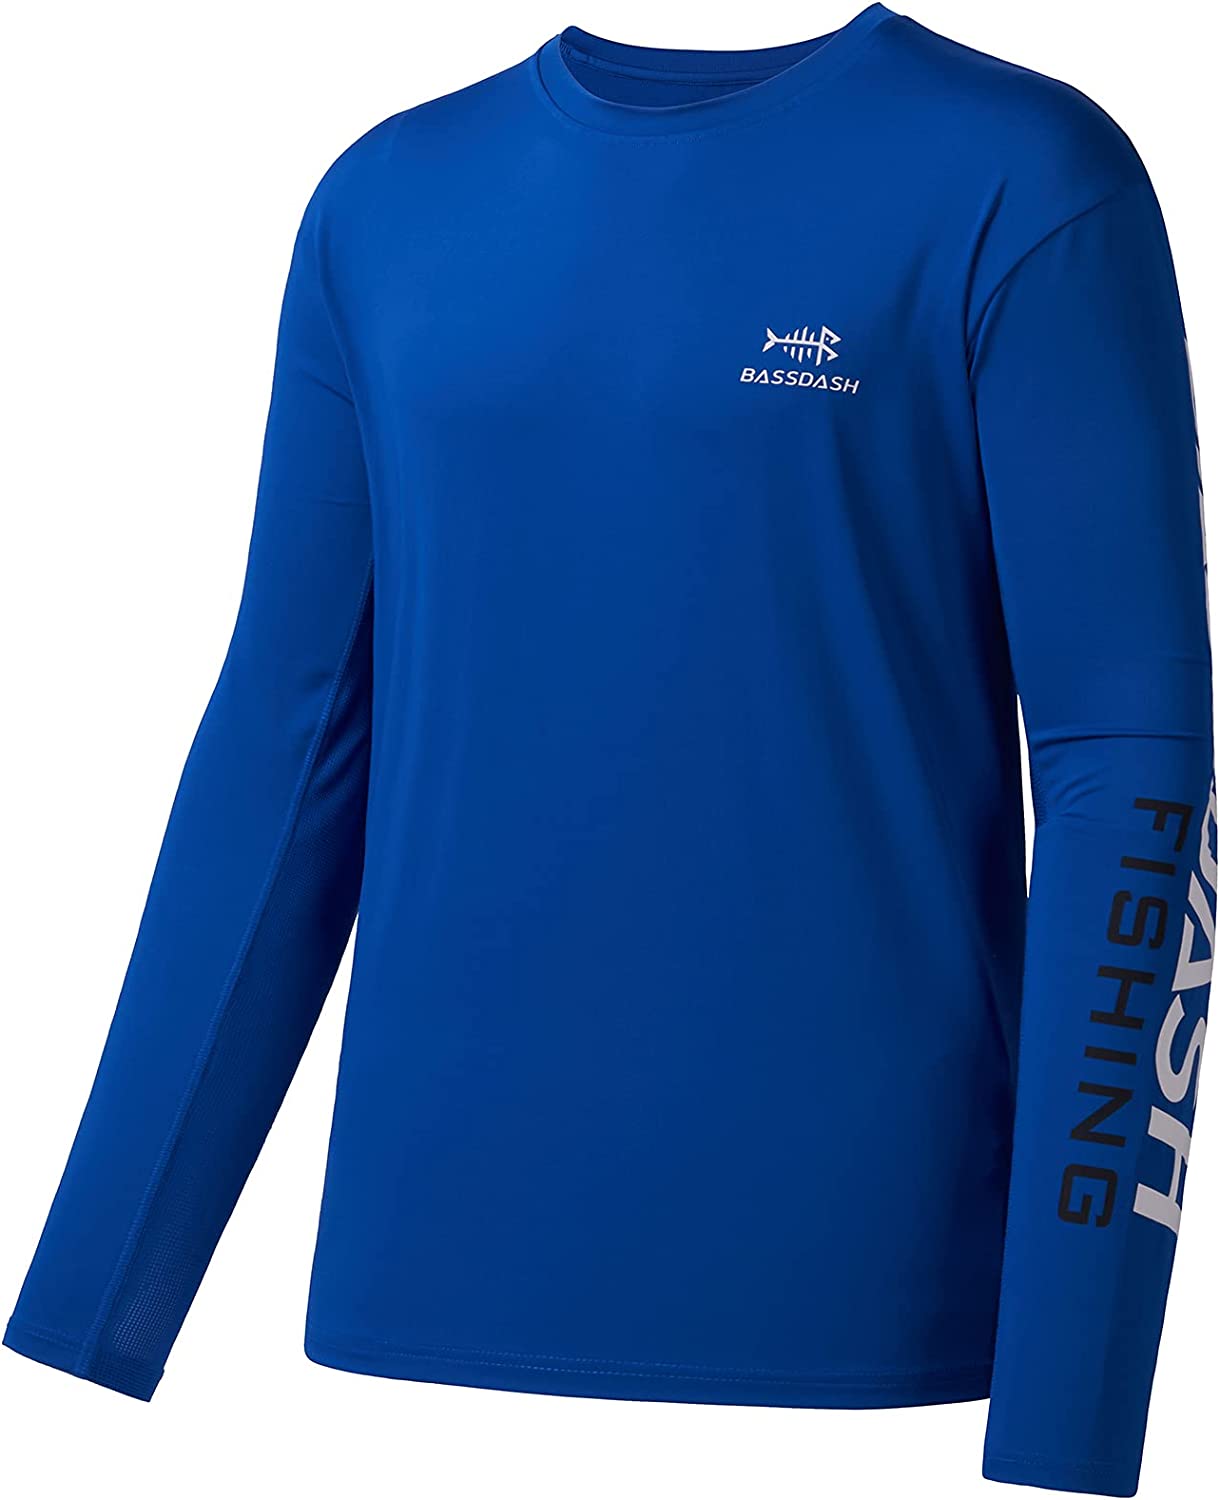 Bassdash Fishing T Shirts for Men UV Sun Protection UPF 50+ Long Sleeve Tee T-Shirt, White/Vivid Blue Logo, 4X-Large